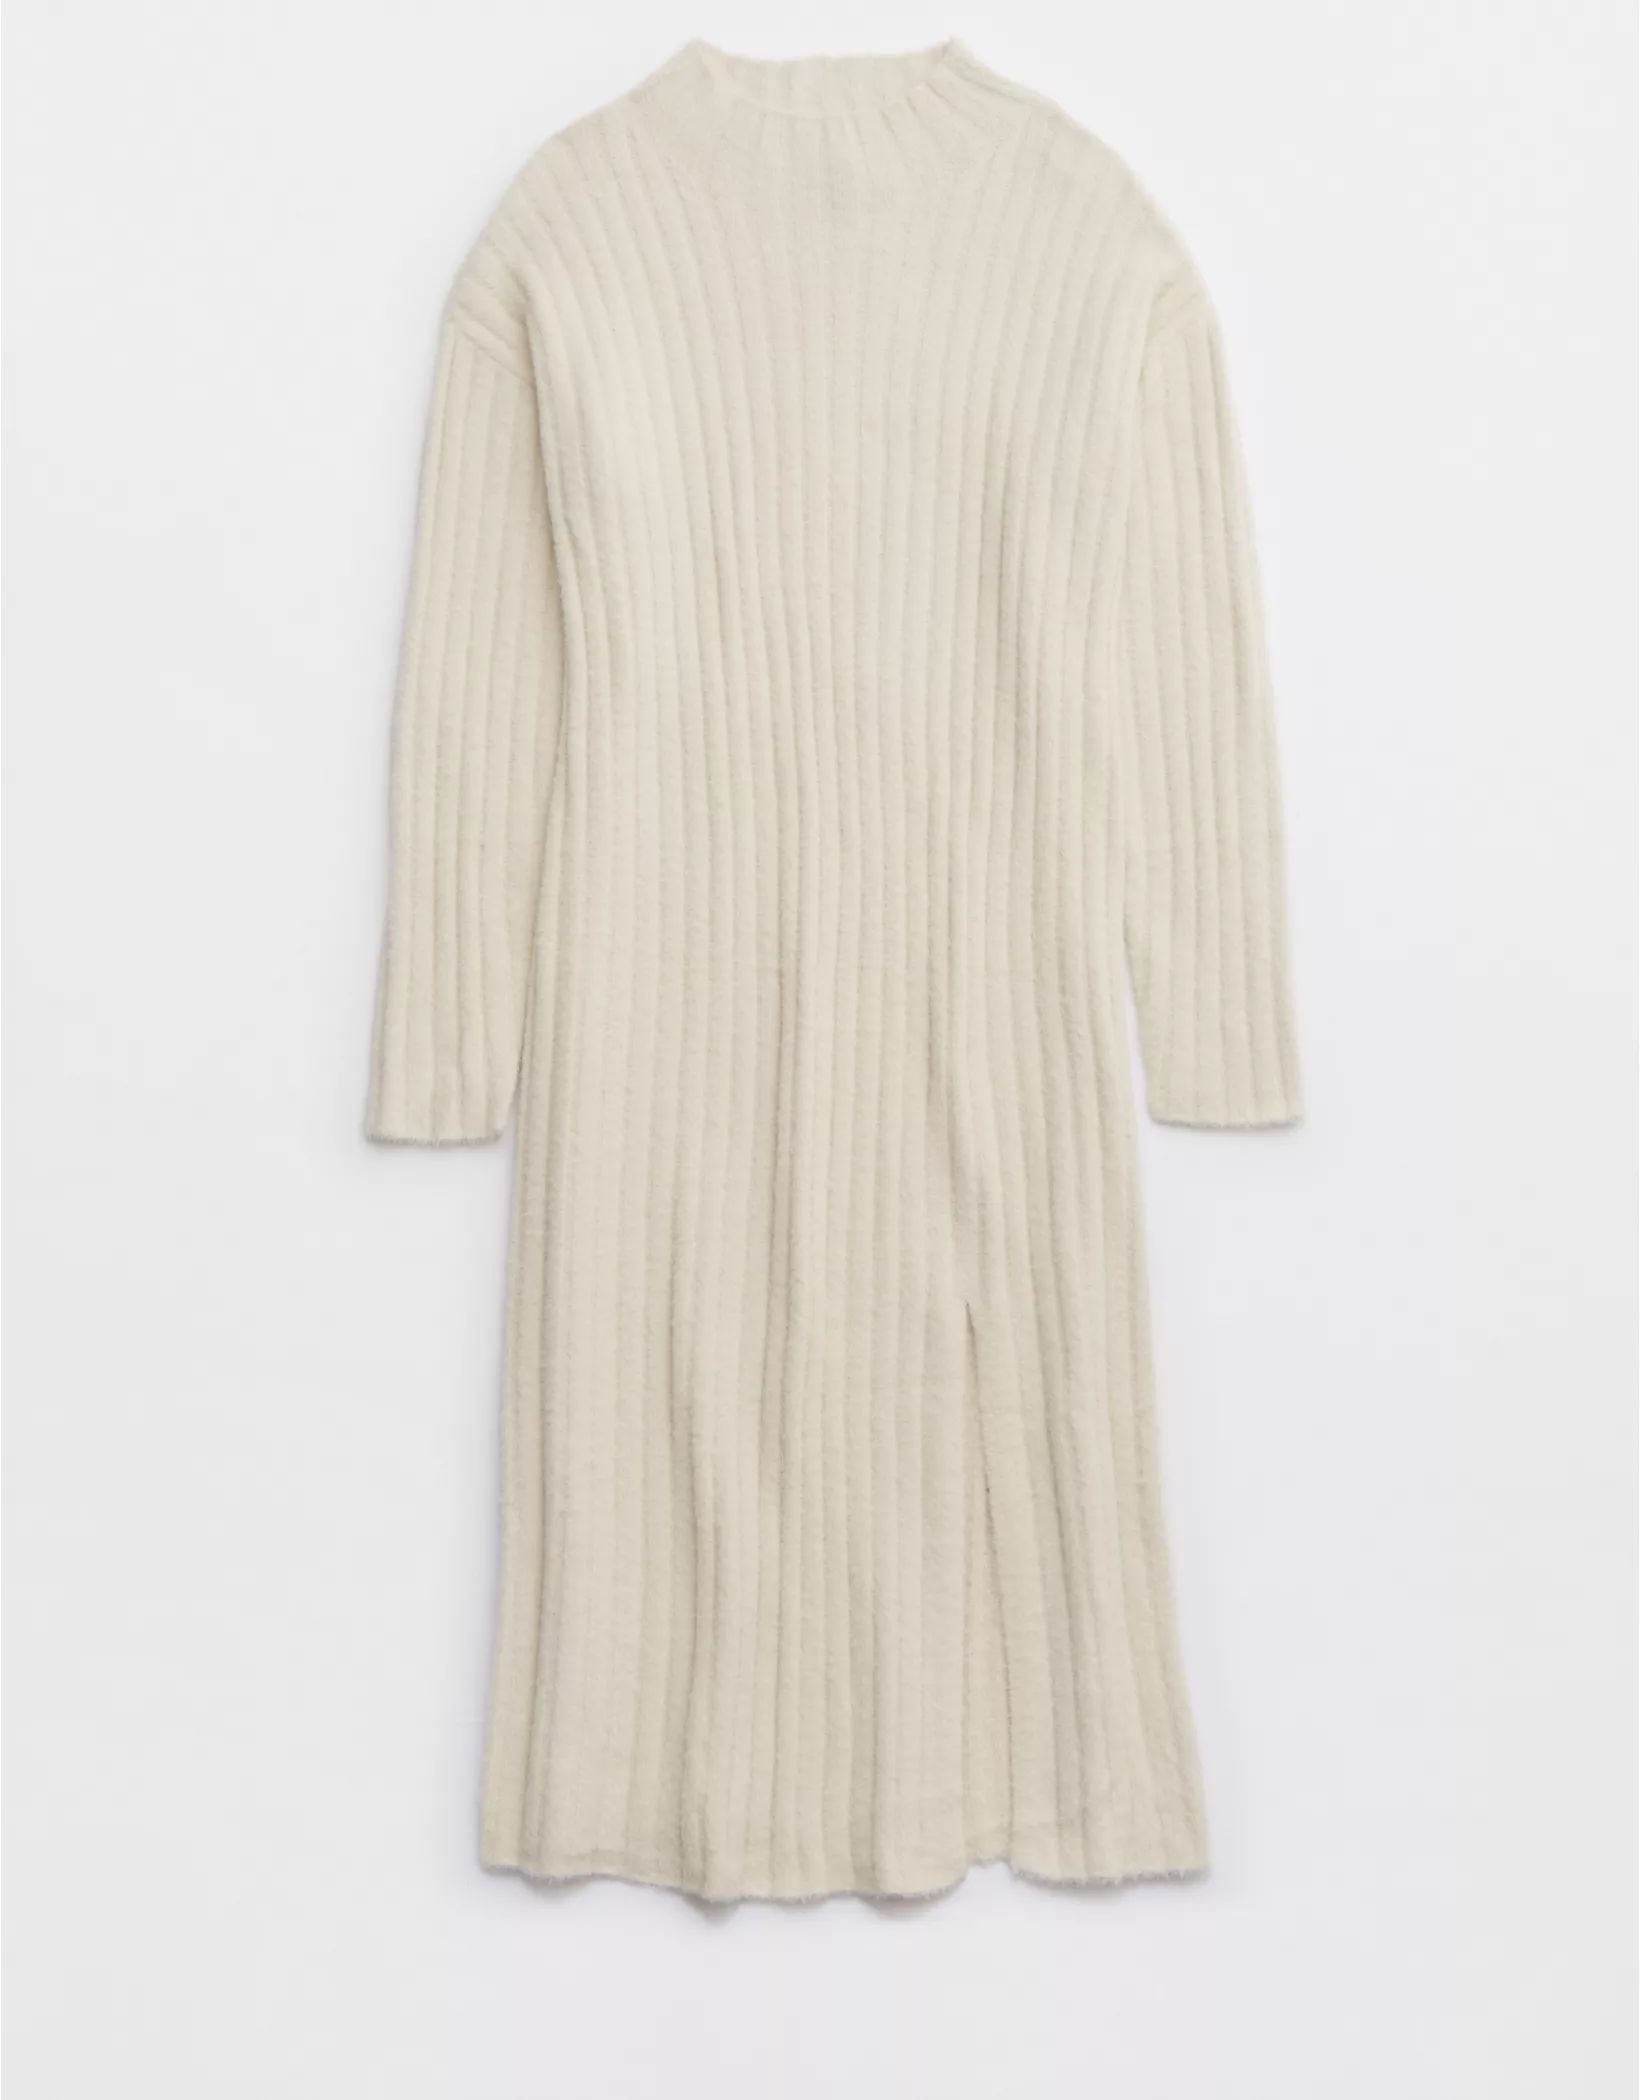 Aerie Buttercream Sweater Dress | Aerie